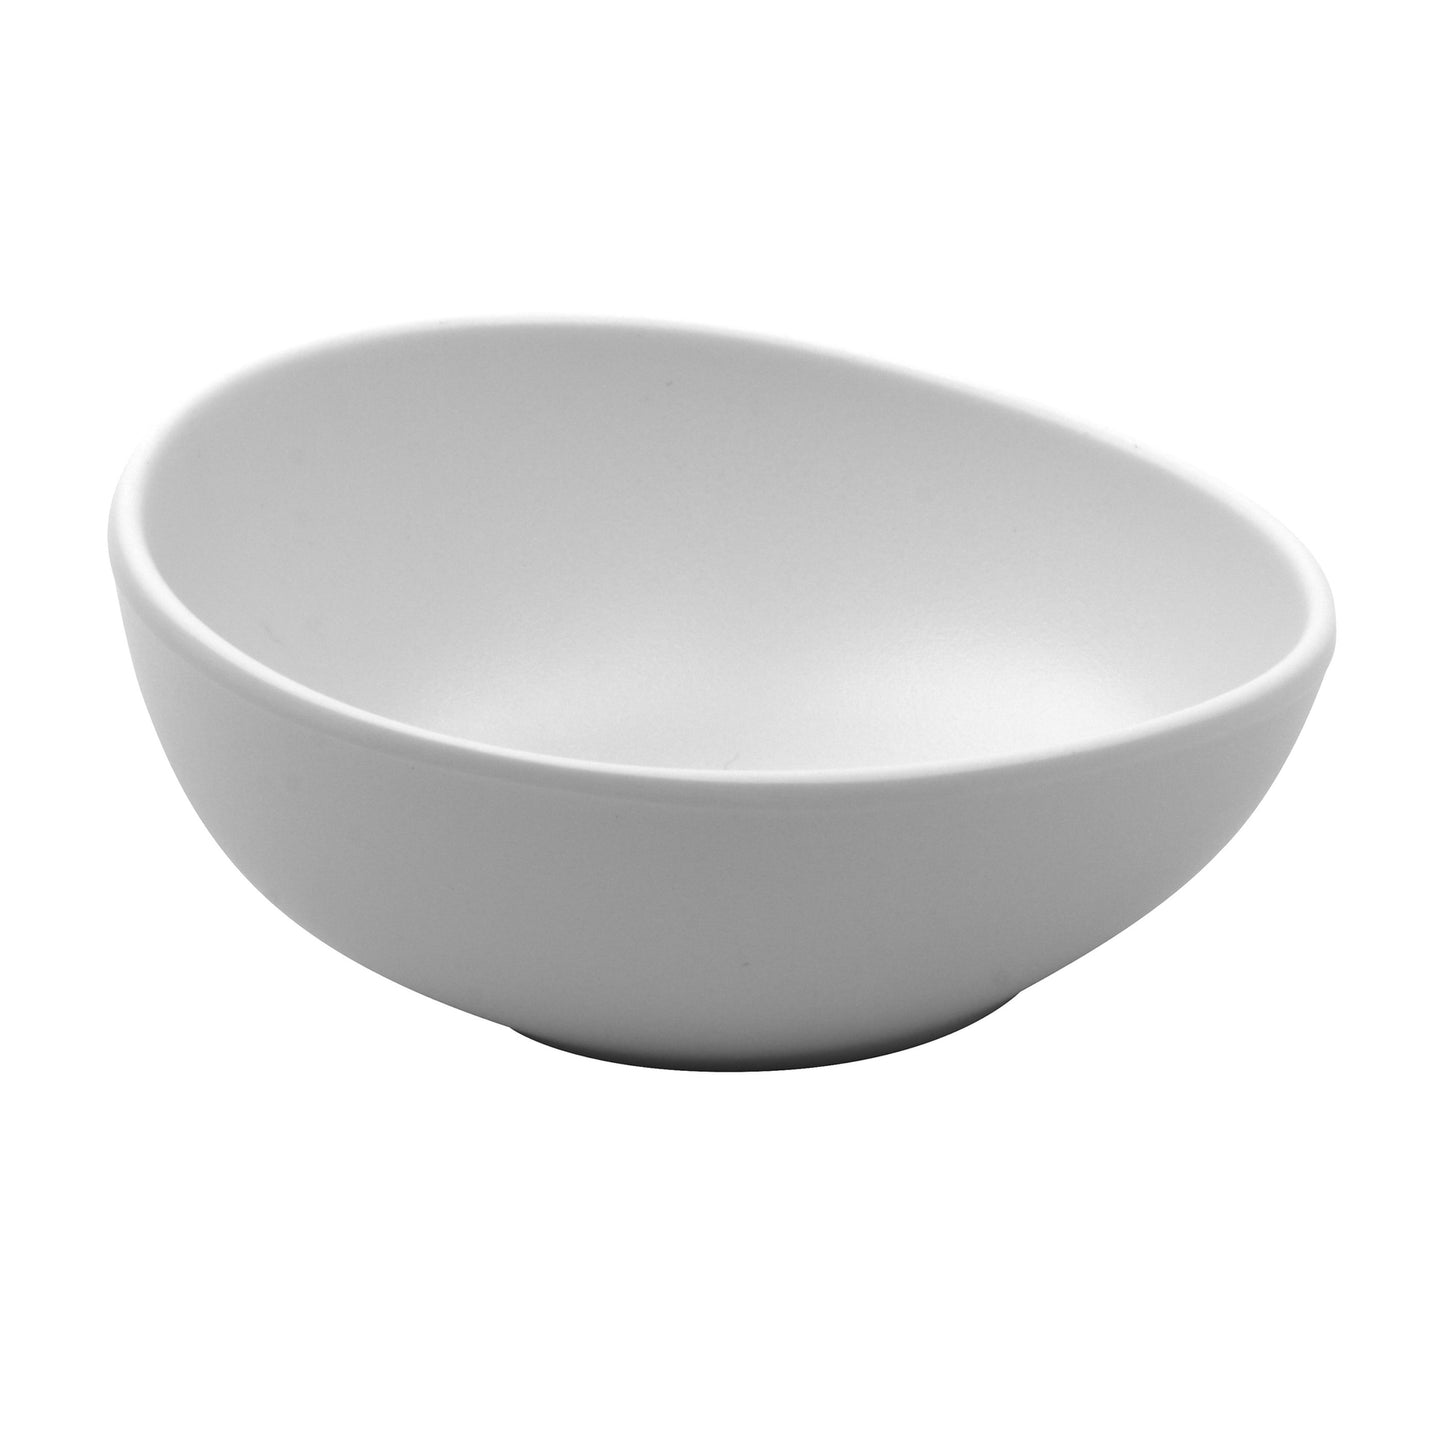 8 oz. White, Melamine, Small Side Dish/Soup Bowl, (11 oz. rim-full), 1.8" H, (2.1" Max H), 5.1" L x 4.4" W, G.E.T. Riverstone (12 Pack)